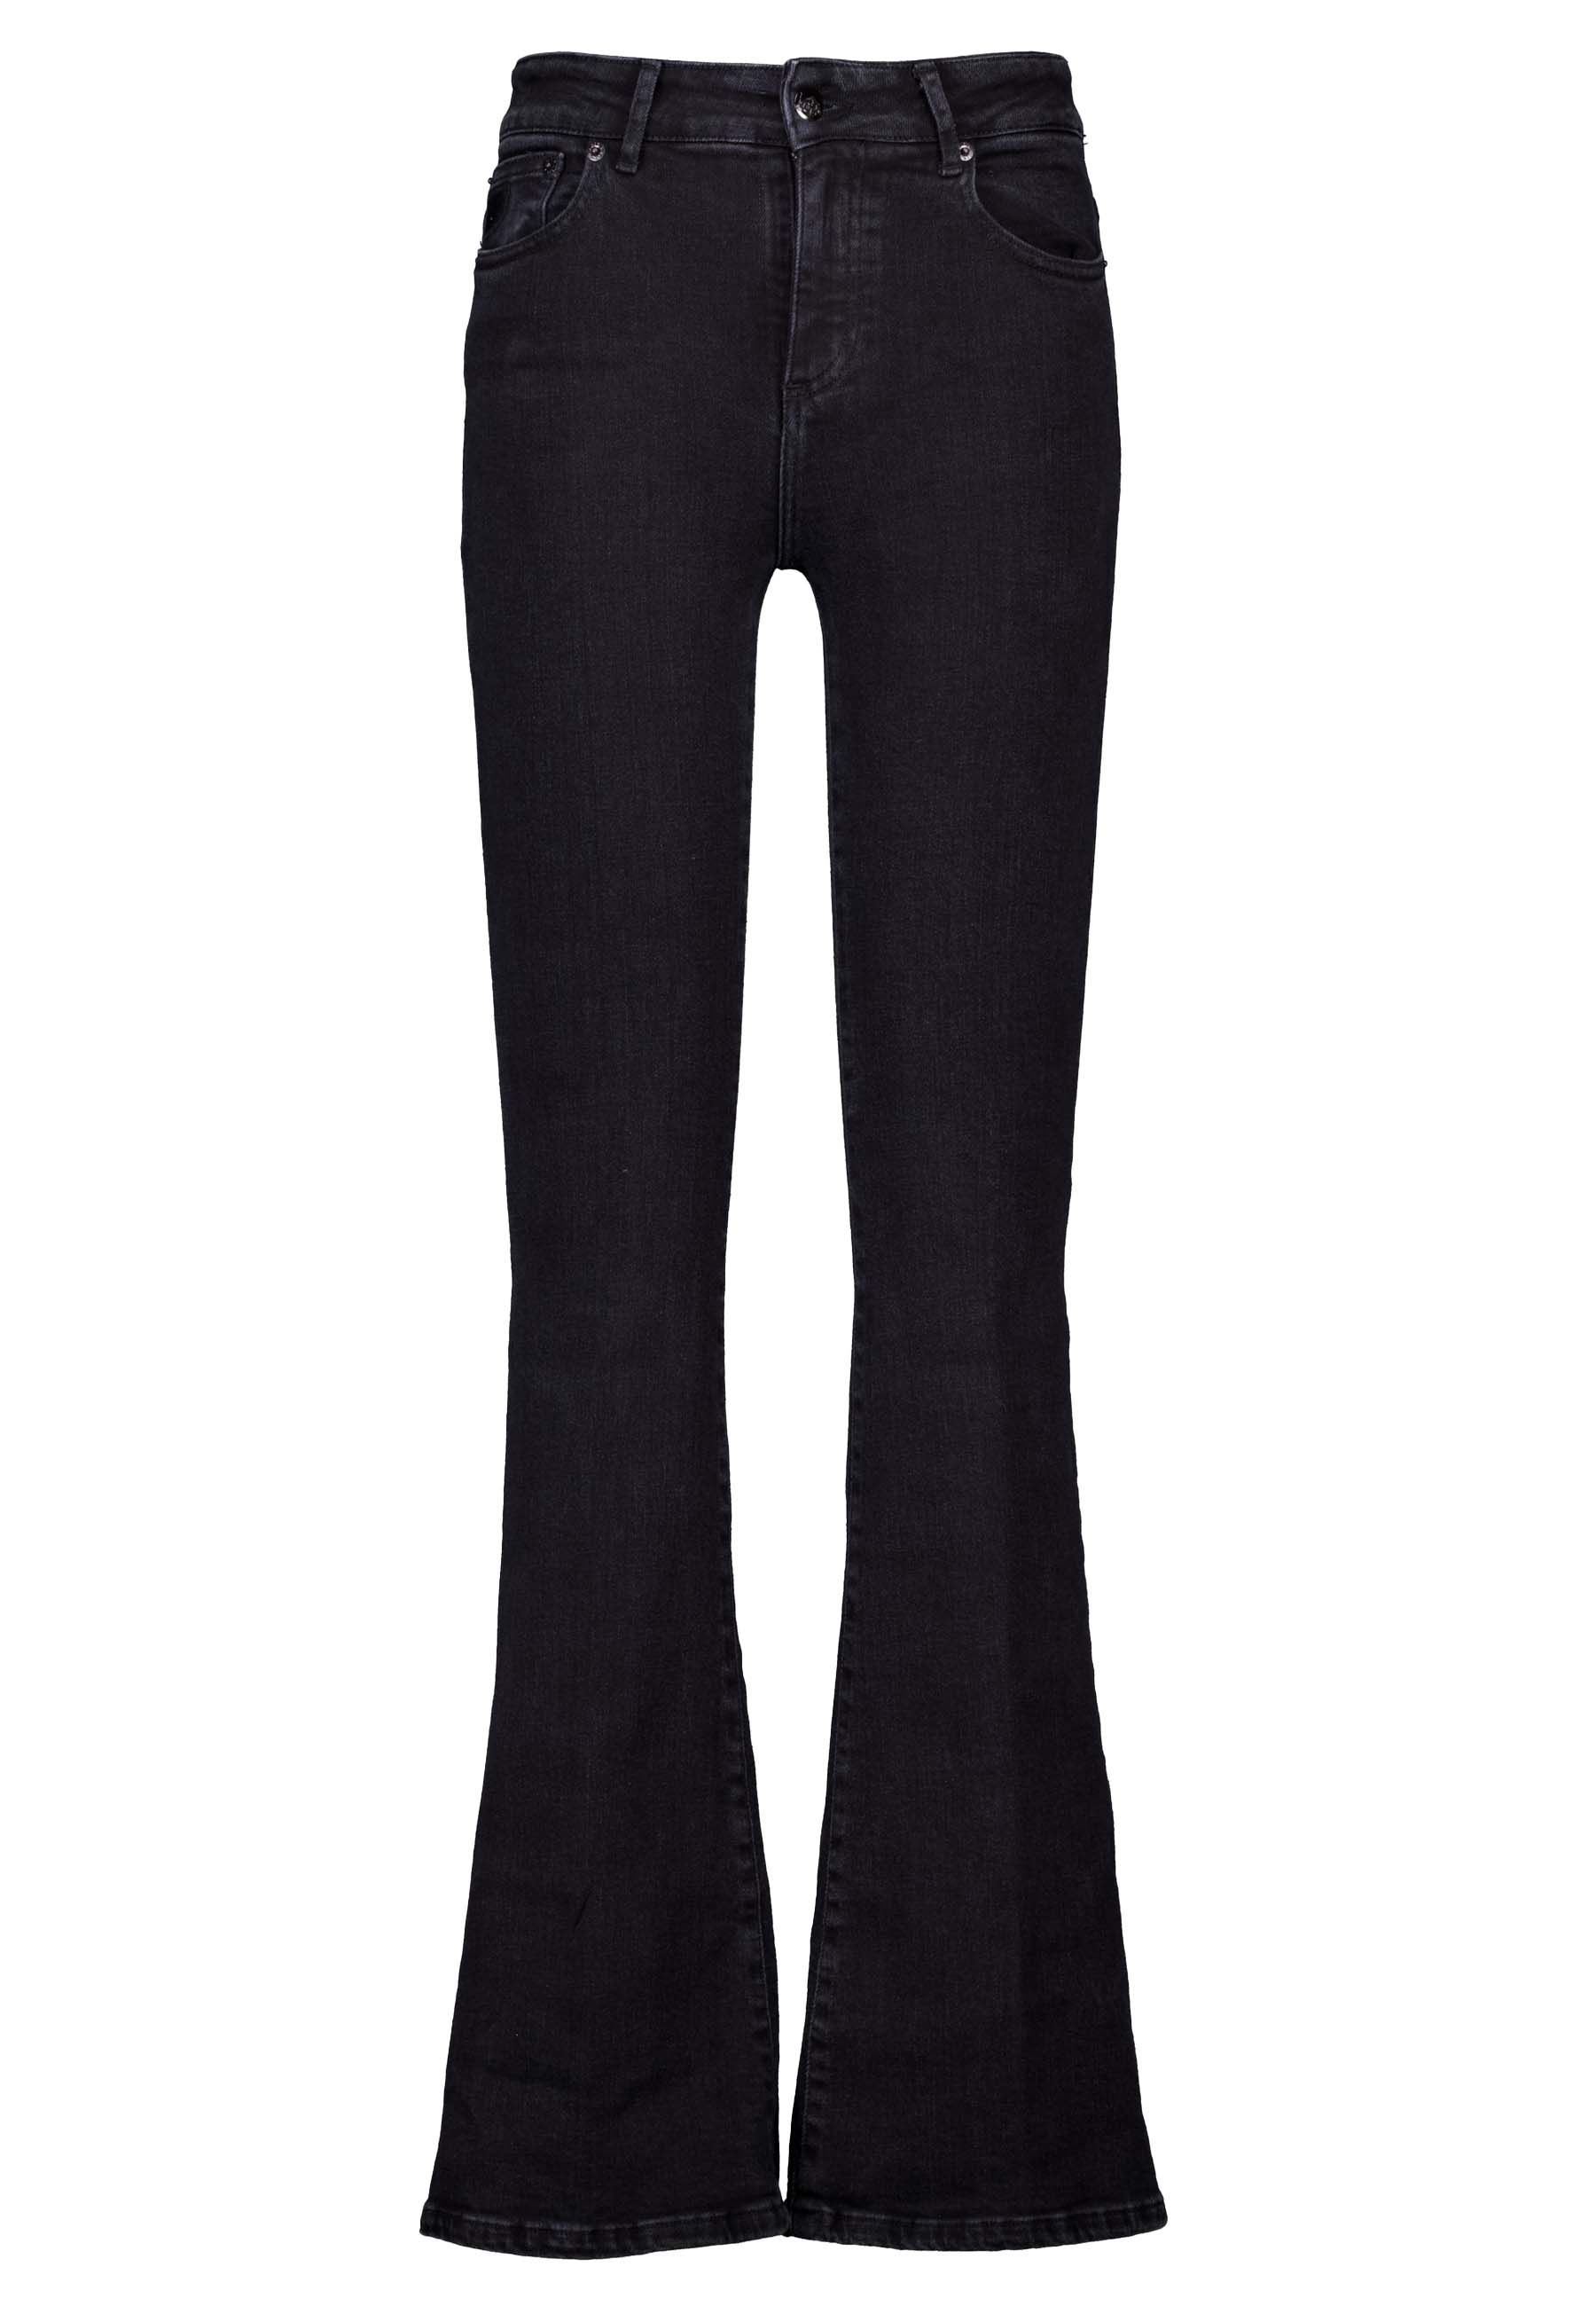 Lois Raval 16 caspar jeans zwart Dames maat 28/34